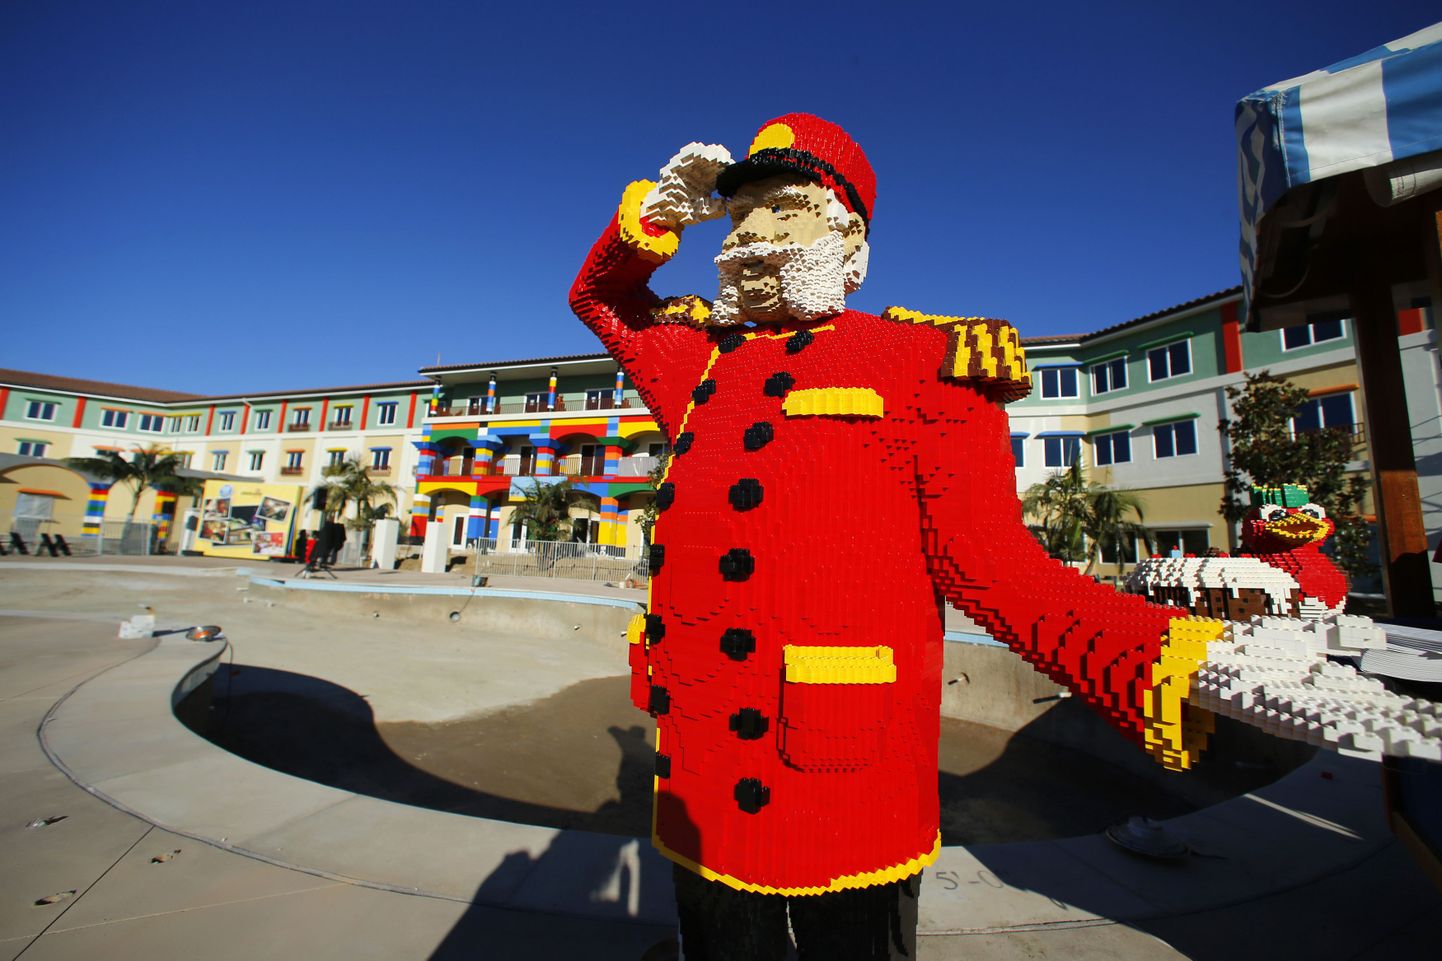 Briti Legolandis tekkis piletijärjekorras massikaklus